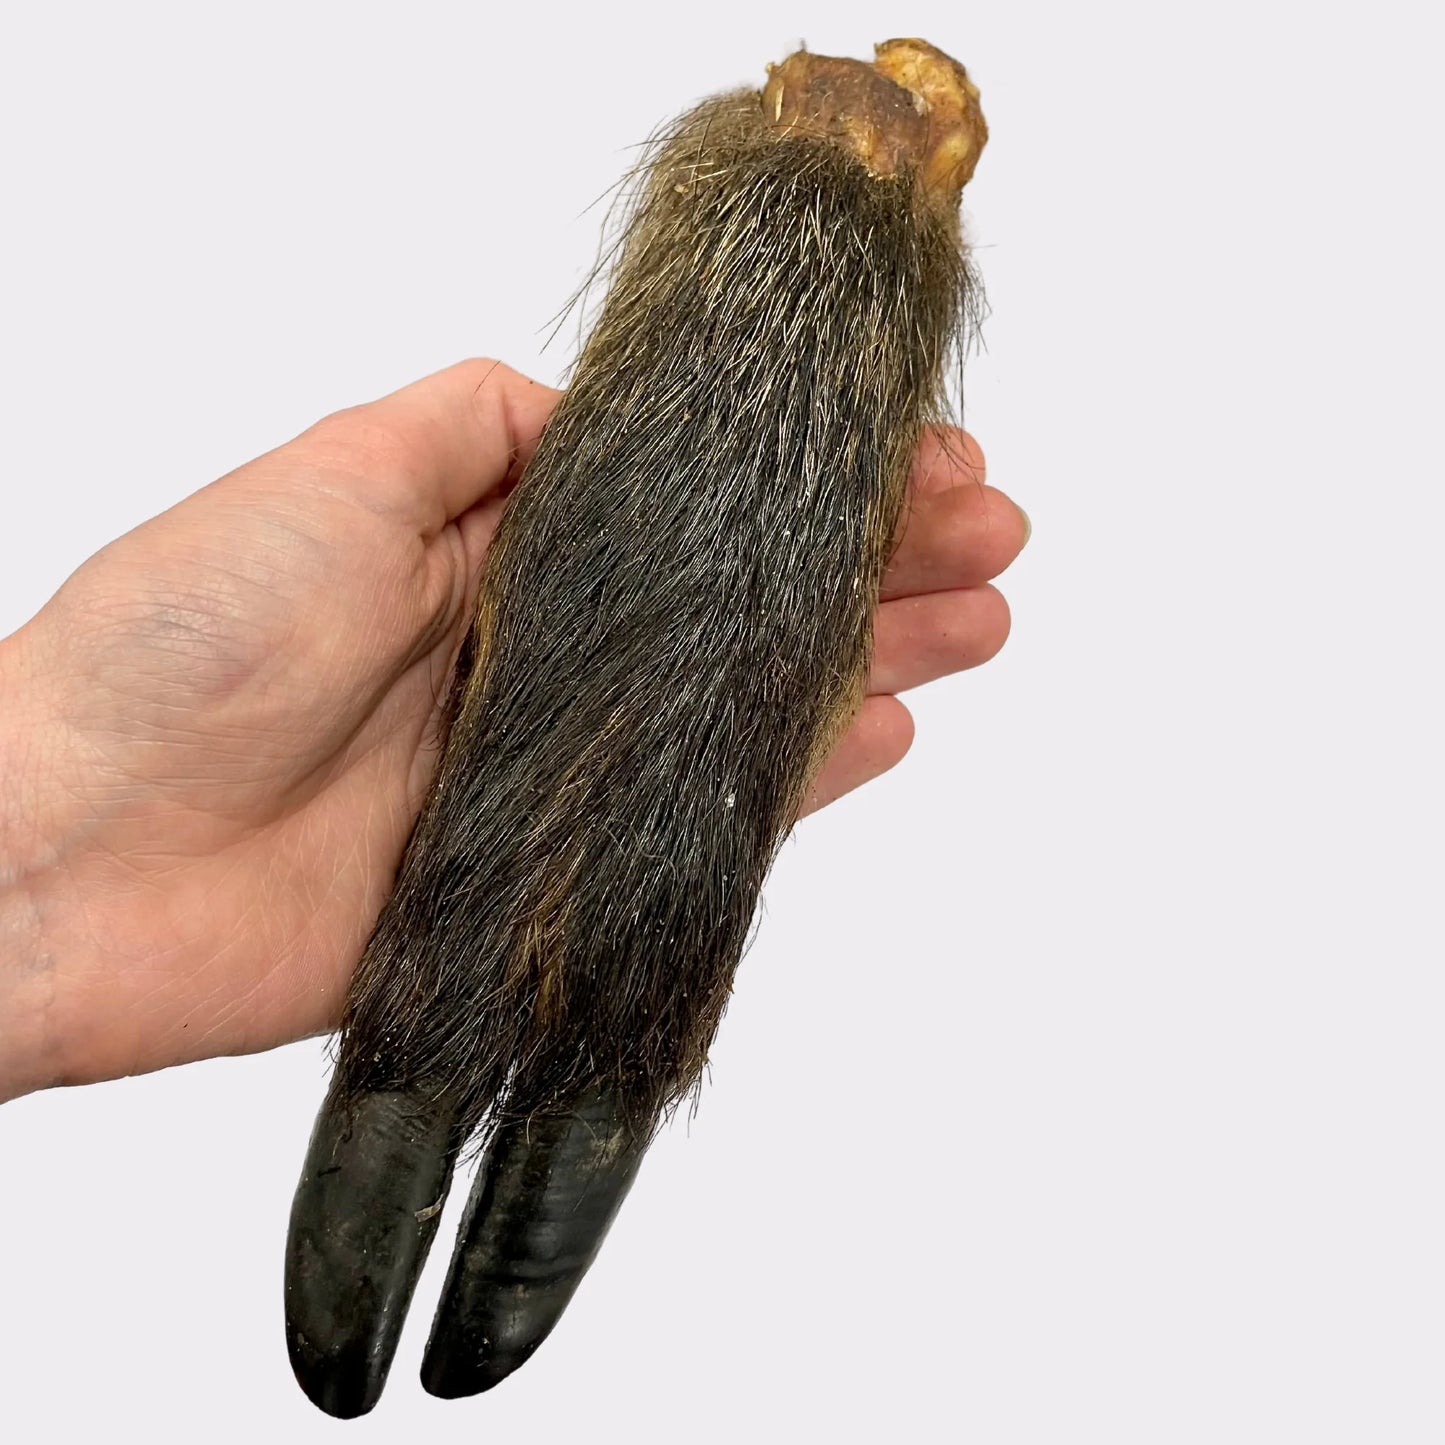 Hairy Wild Boar feet - natural dog treats